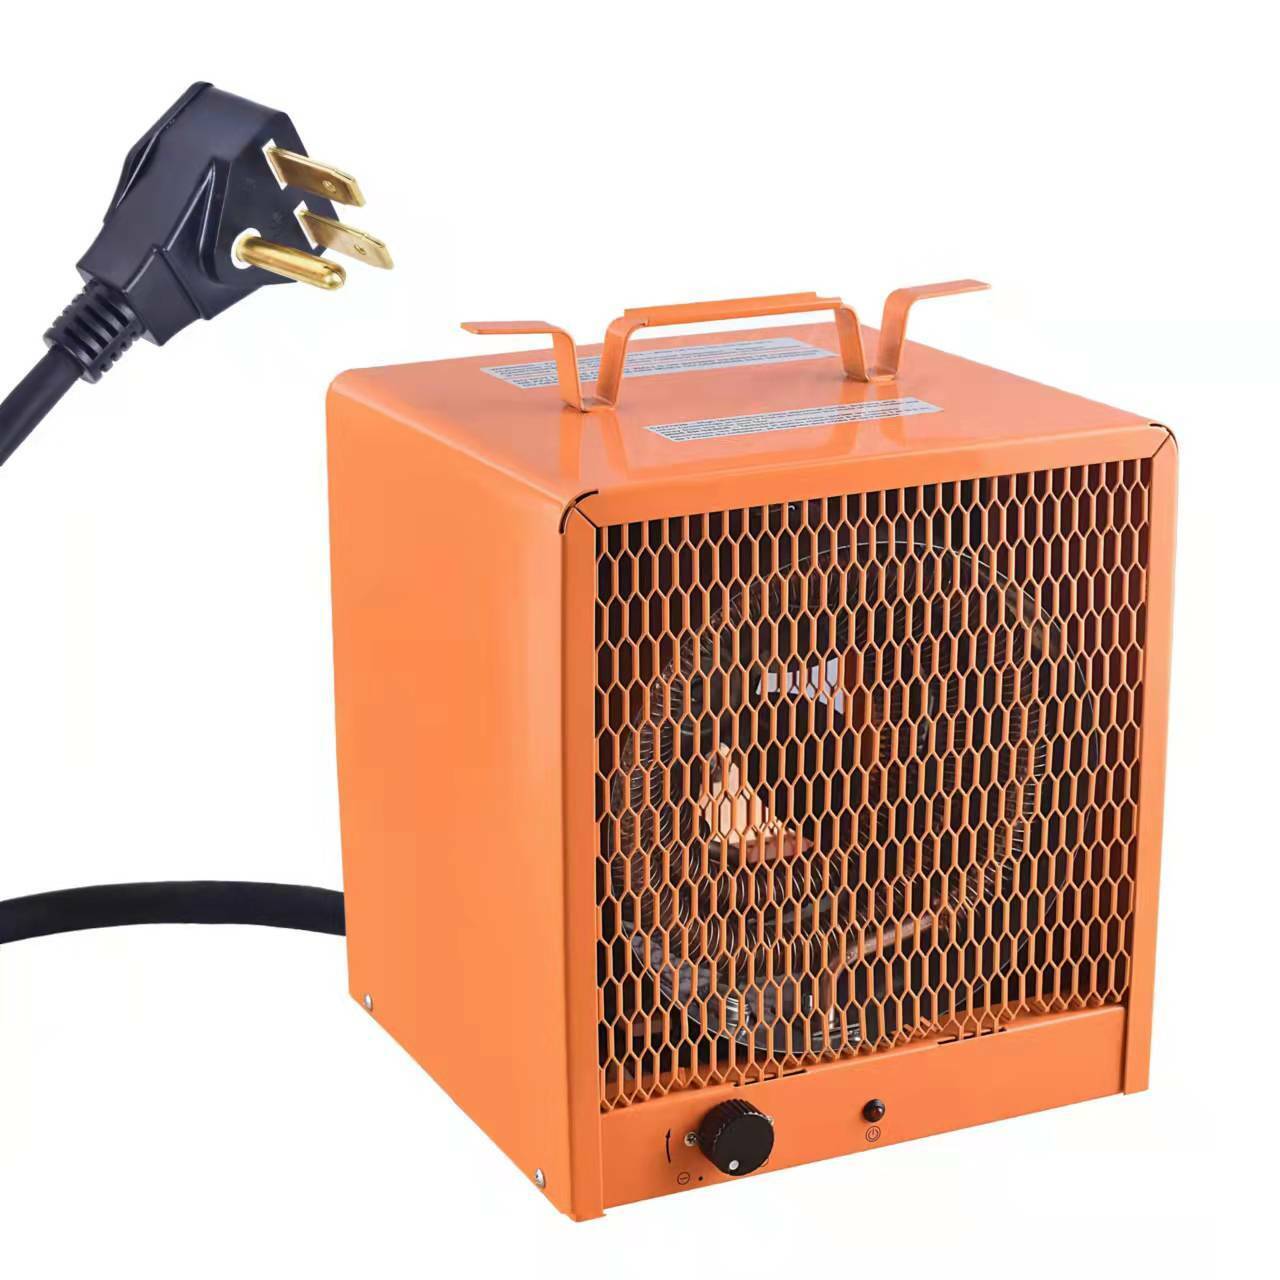 Portable Space Heater Fan warehouse Shop Utility Industrial Use 4800W/240V/60Hz